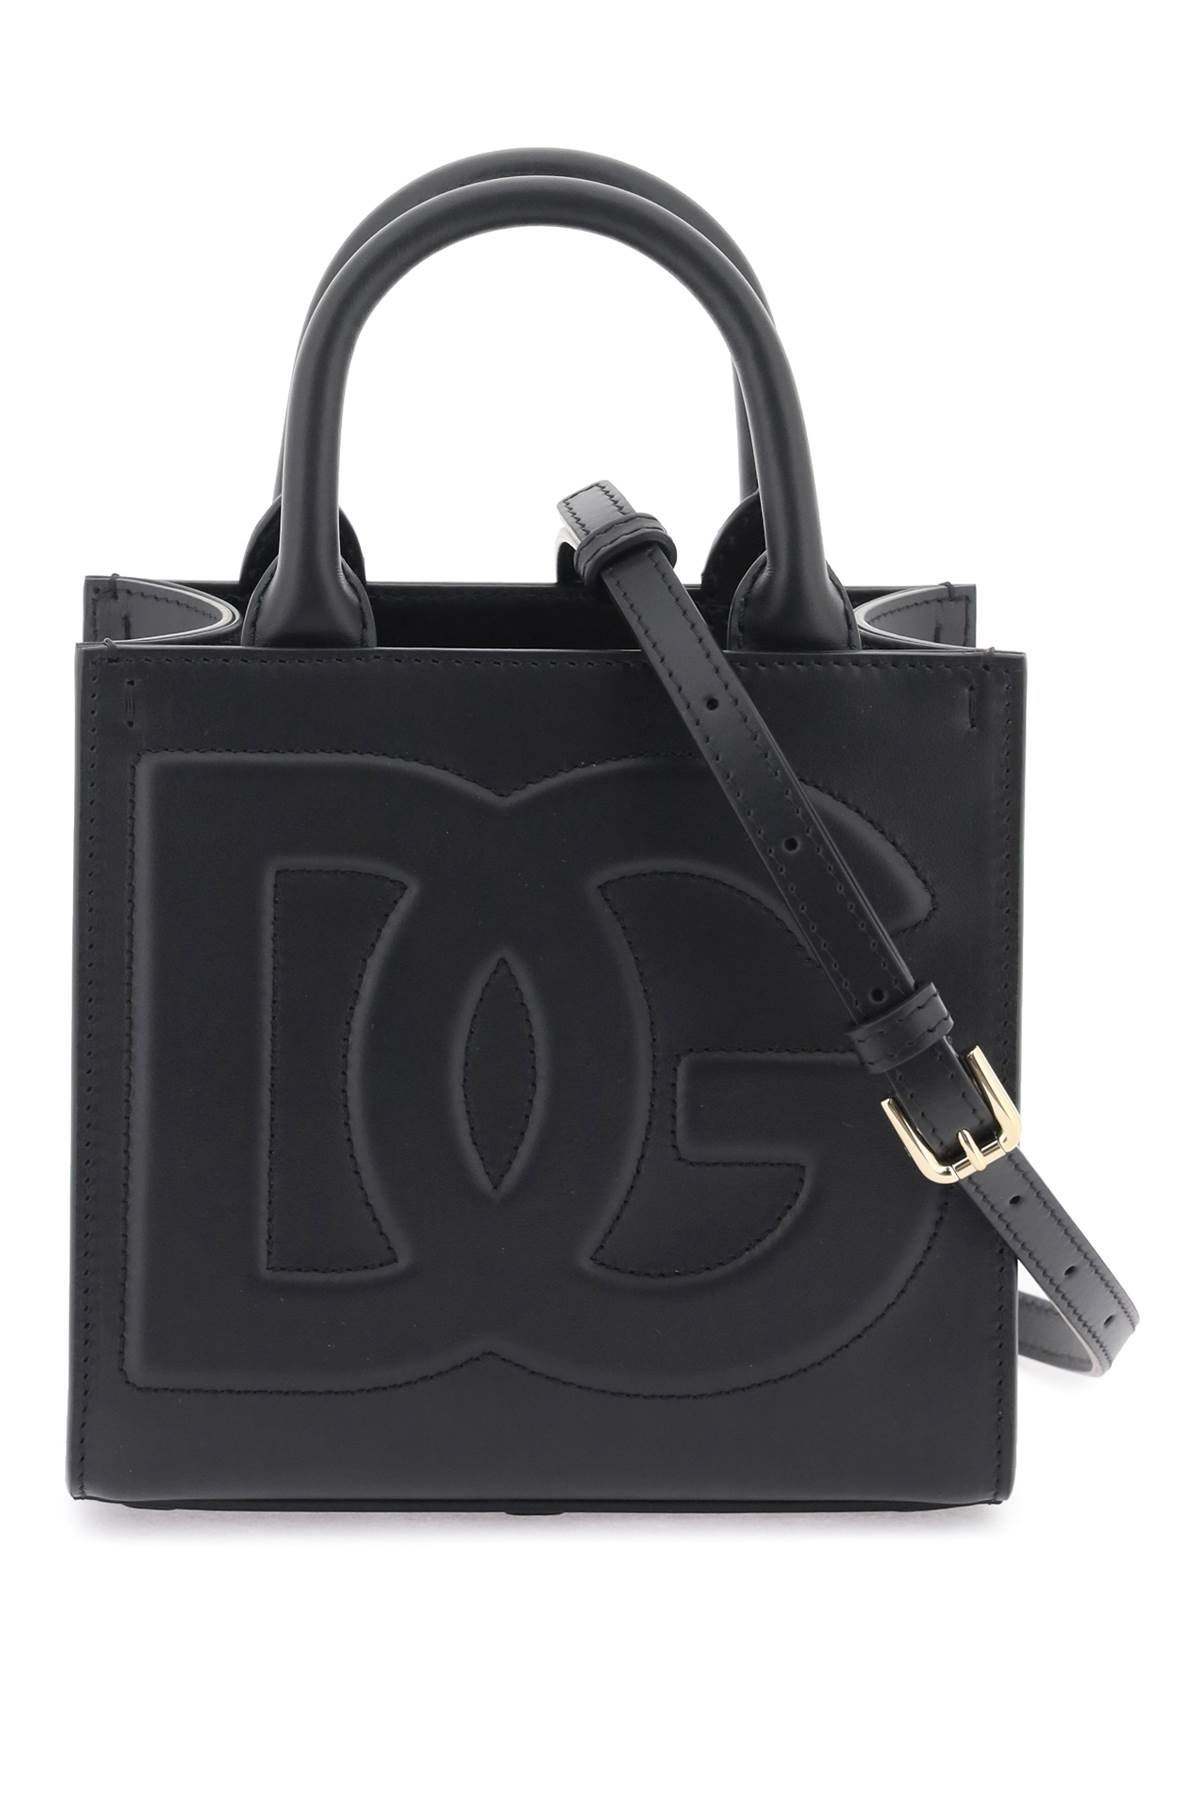 Dolce & Gabbana Dg Daily Tote Bag